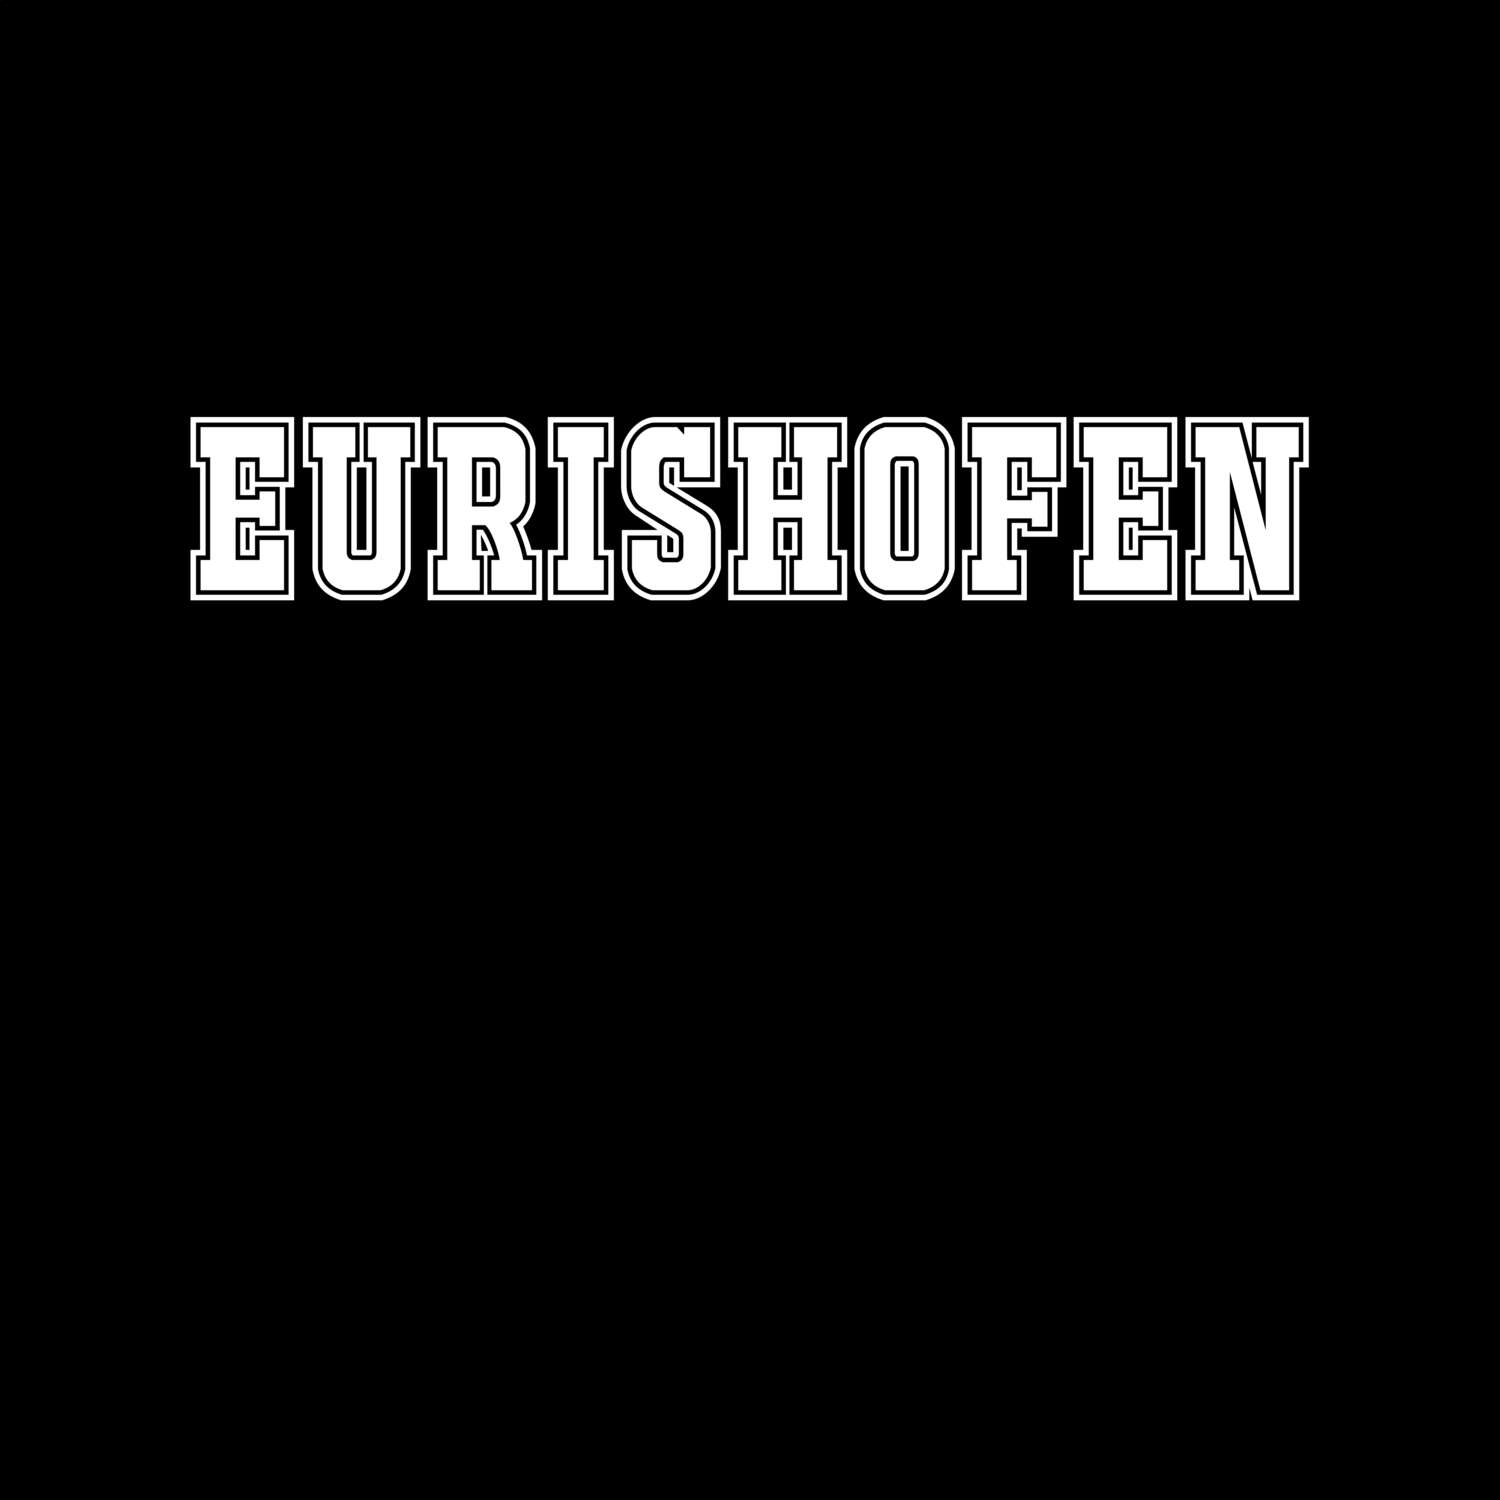 Eurishofen T-Shirt »Classic«